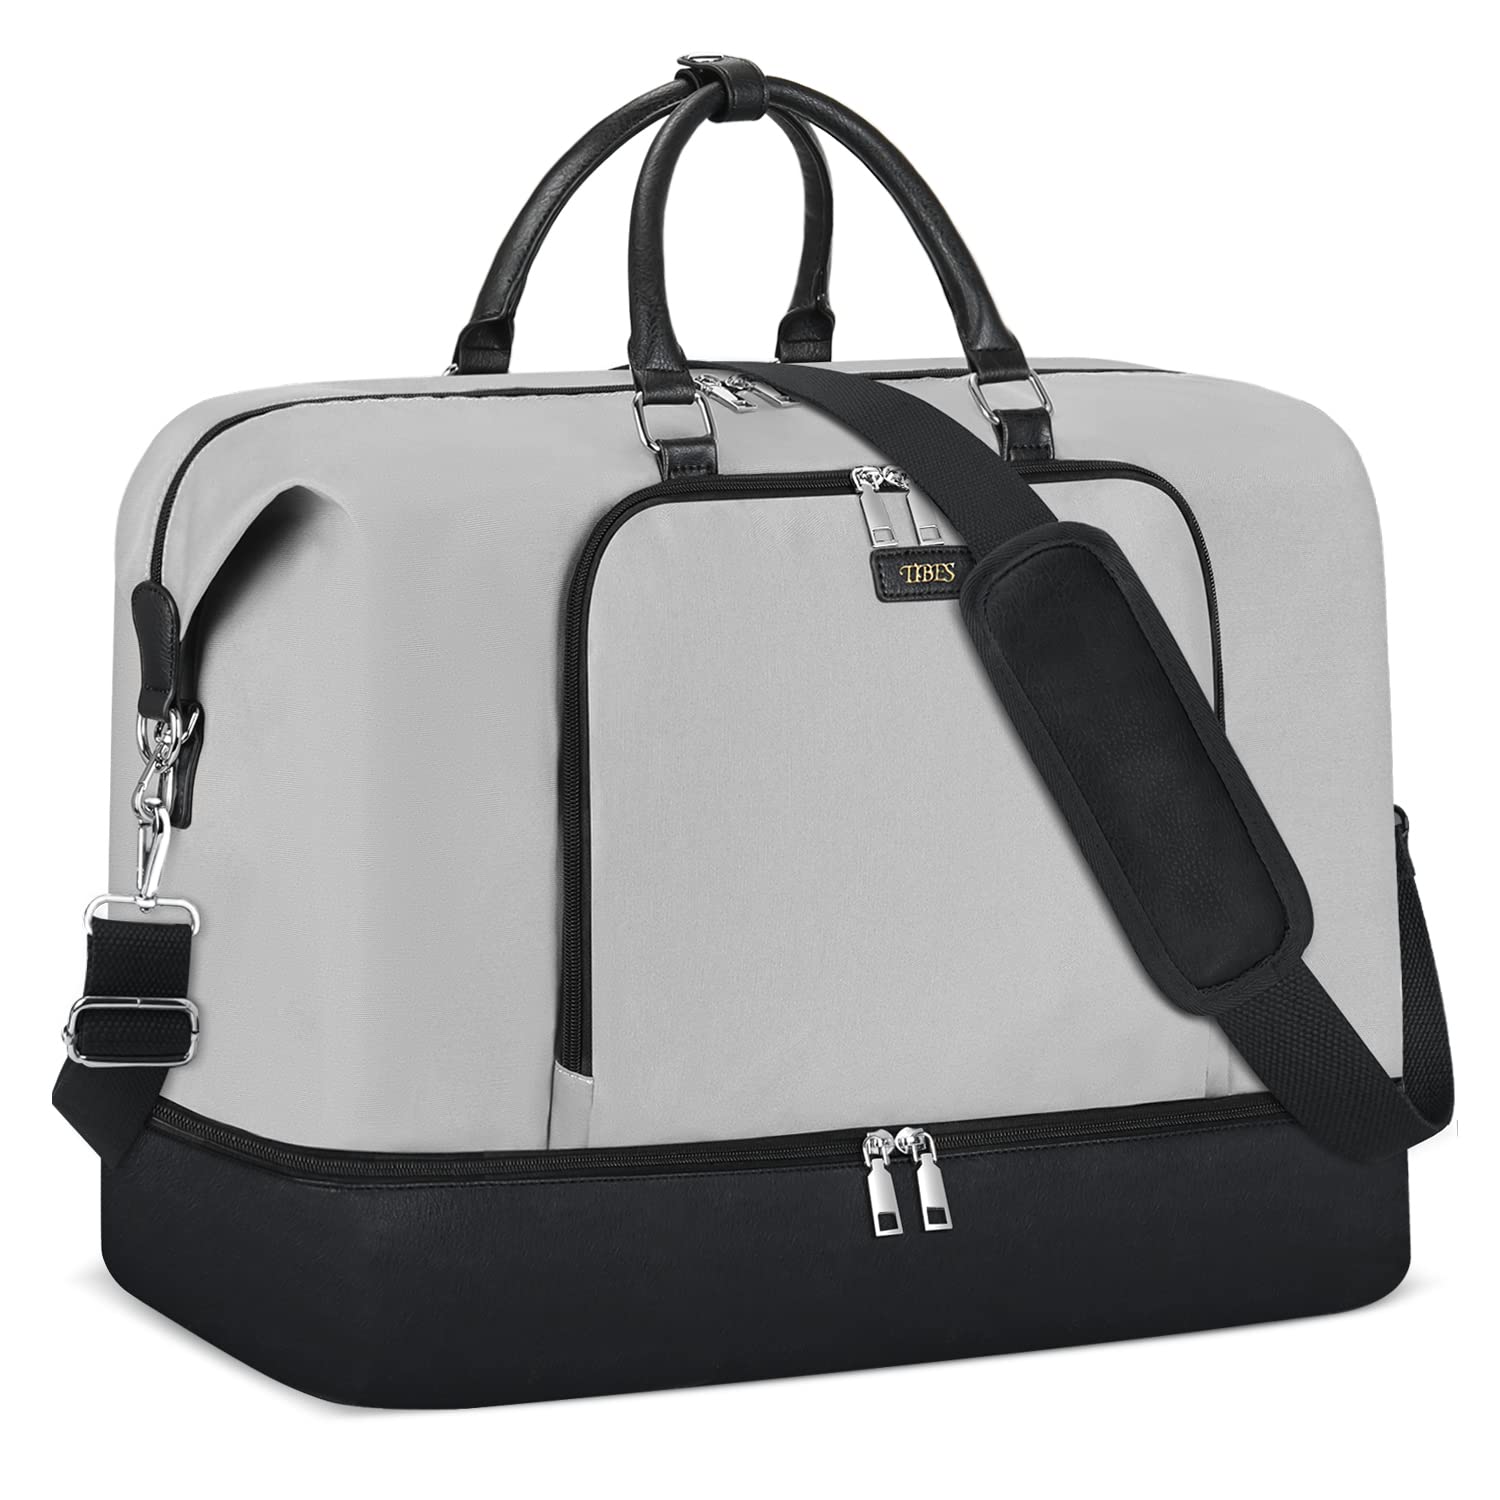 Swiss Men Travel Bags Luggage Oxford Duffle Bags Travel Handbag